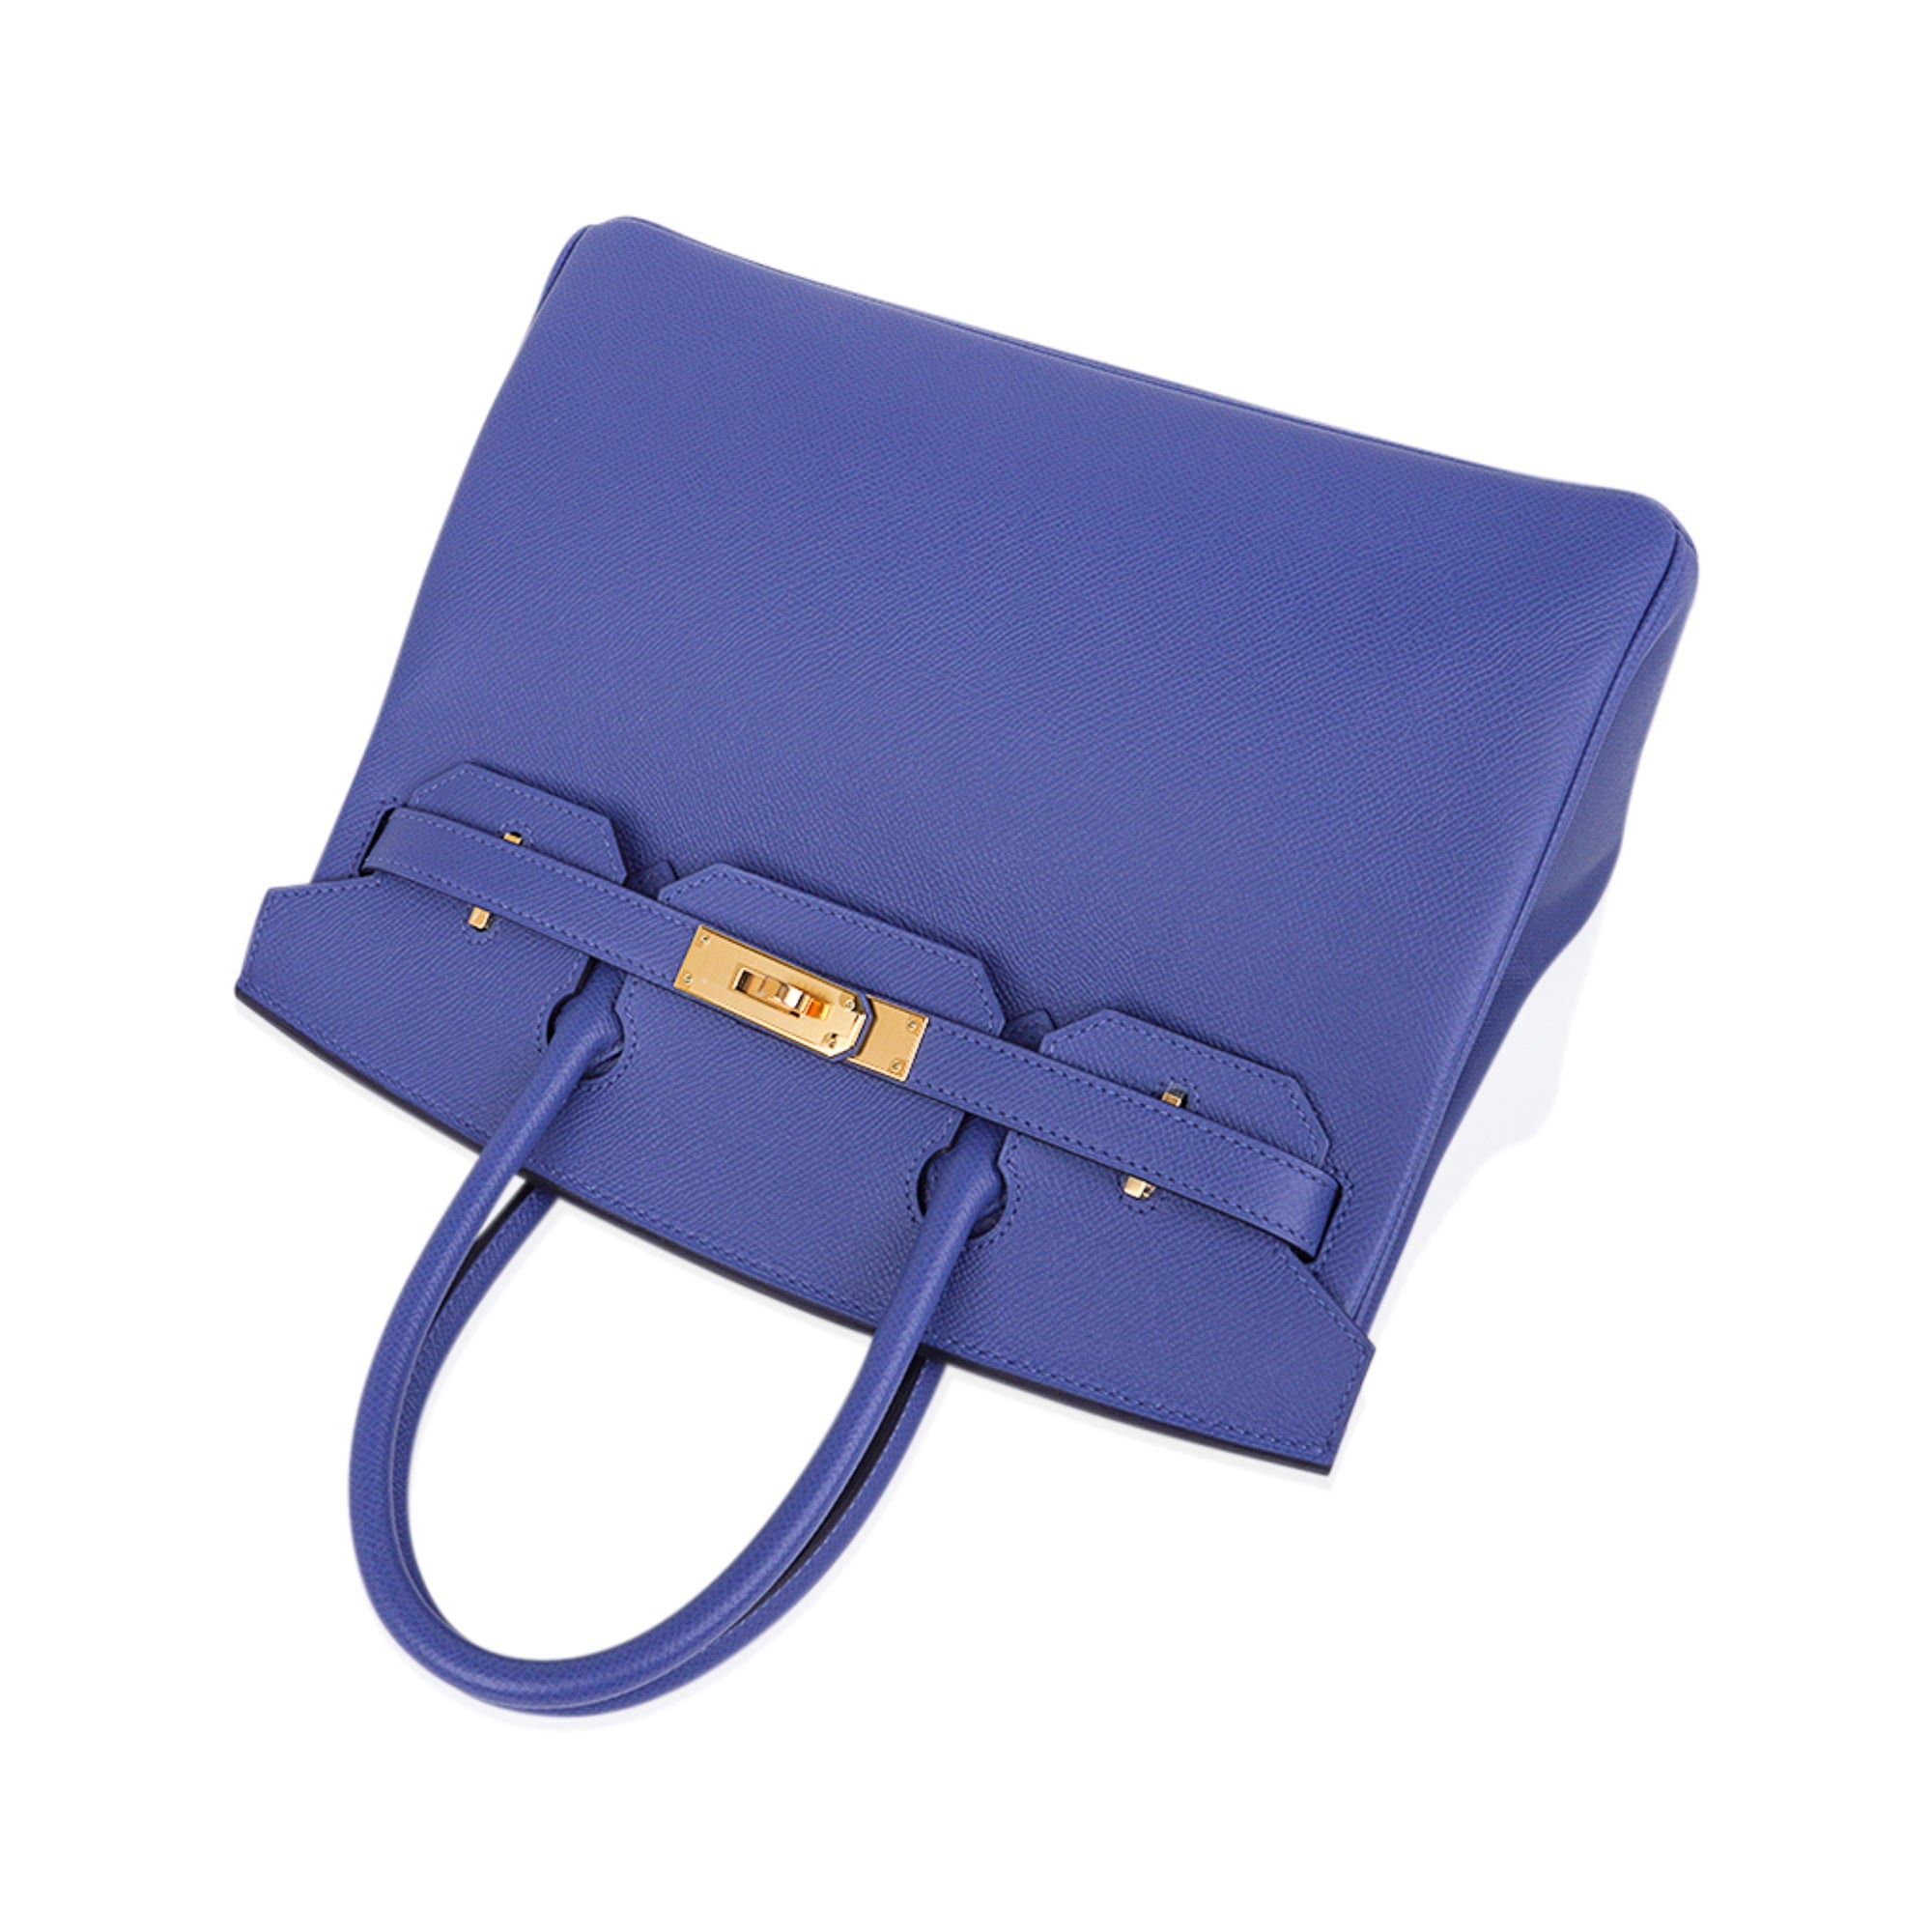 Hermes Birkin 30 Handbag Bleu Brighton Epsom Leather With